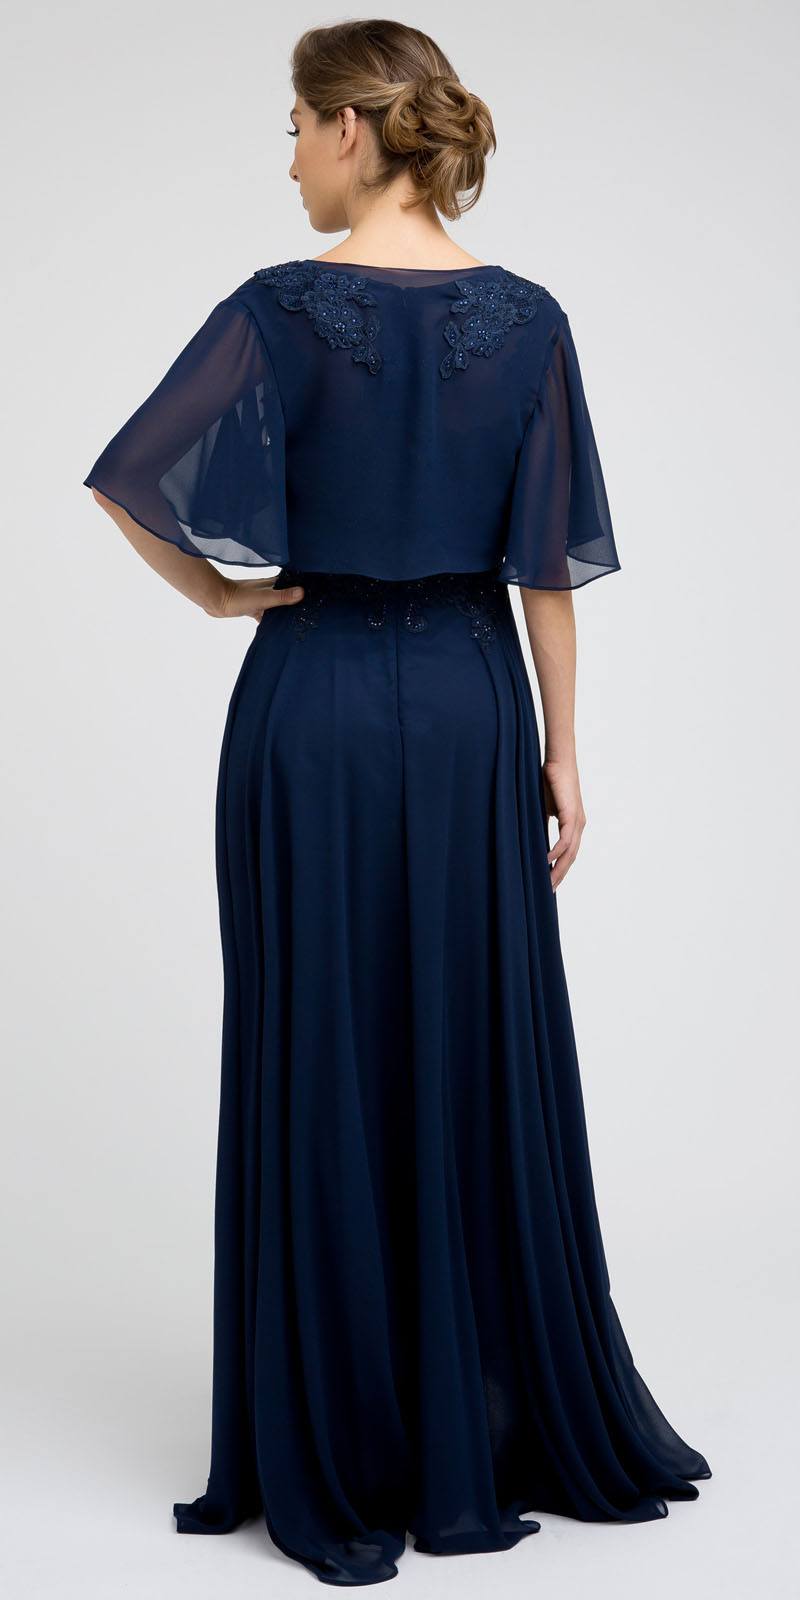 Juliet M13 Navy Blue Appliqued Long Prom Dress with Short Sleeve Bolero ...